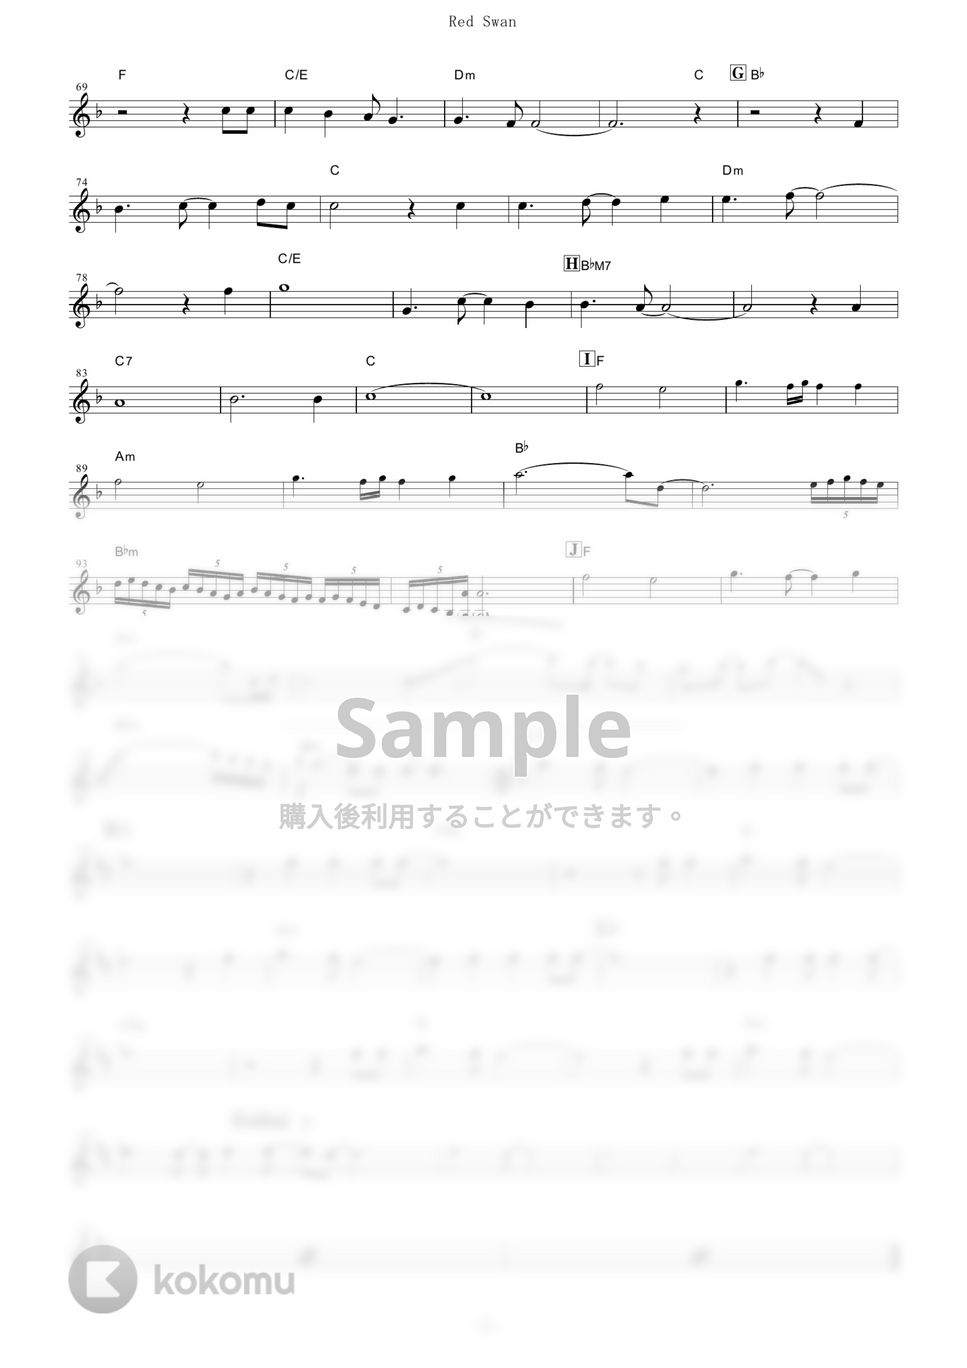 YOSHIKI feat. HYDE - Red Swan (『進撃の巨人』 / in Eb) by muta-sax